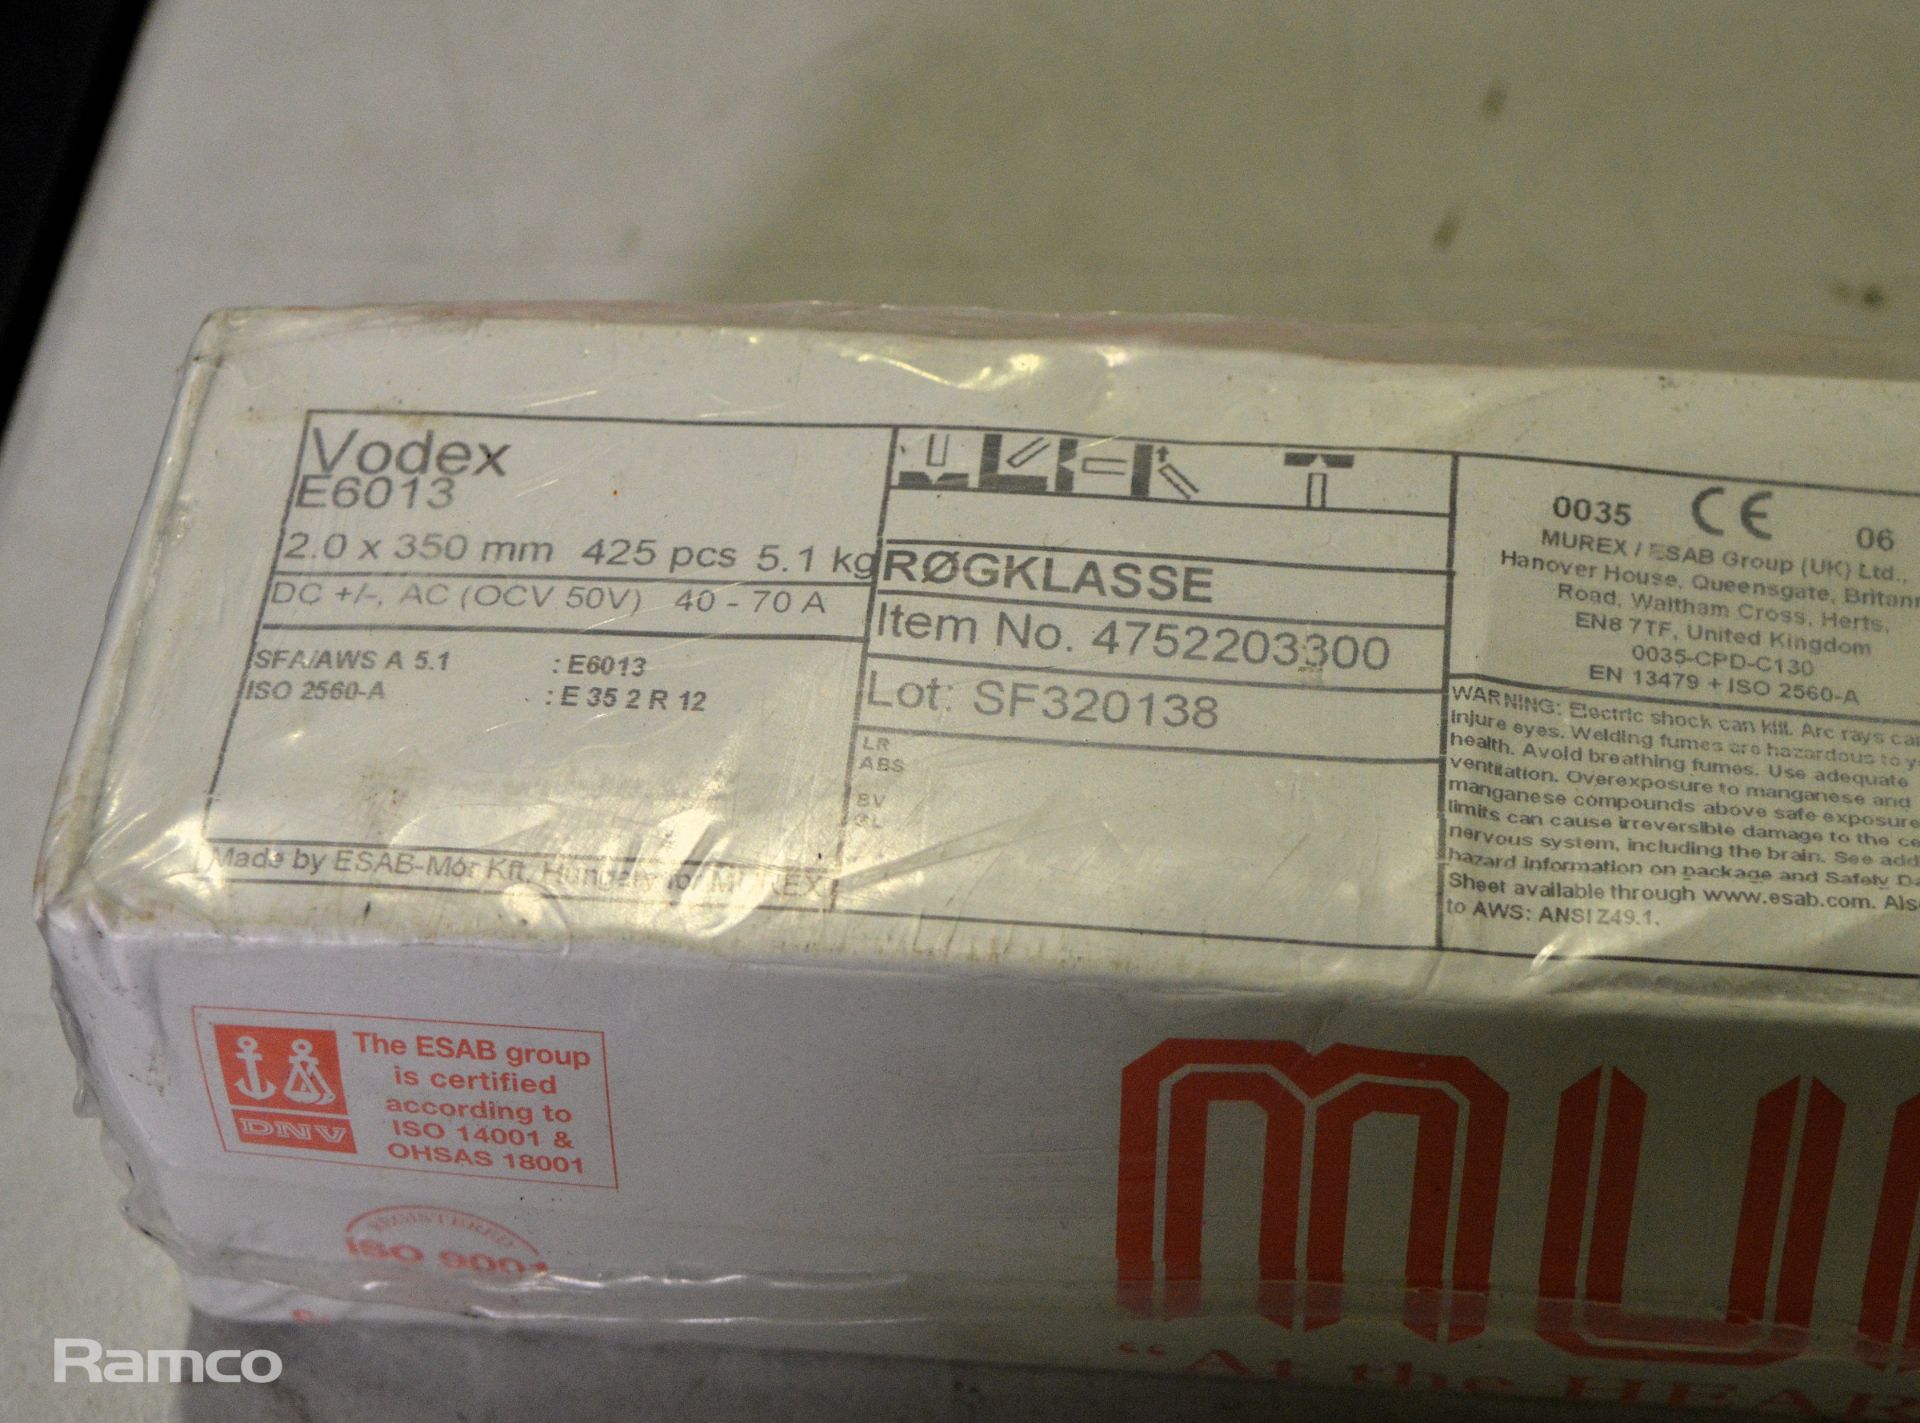 Murex Vodex E6013 Welding Electrodes 2.0 x 350mm - Image 2 of 2